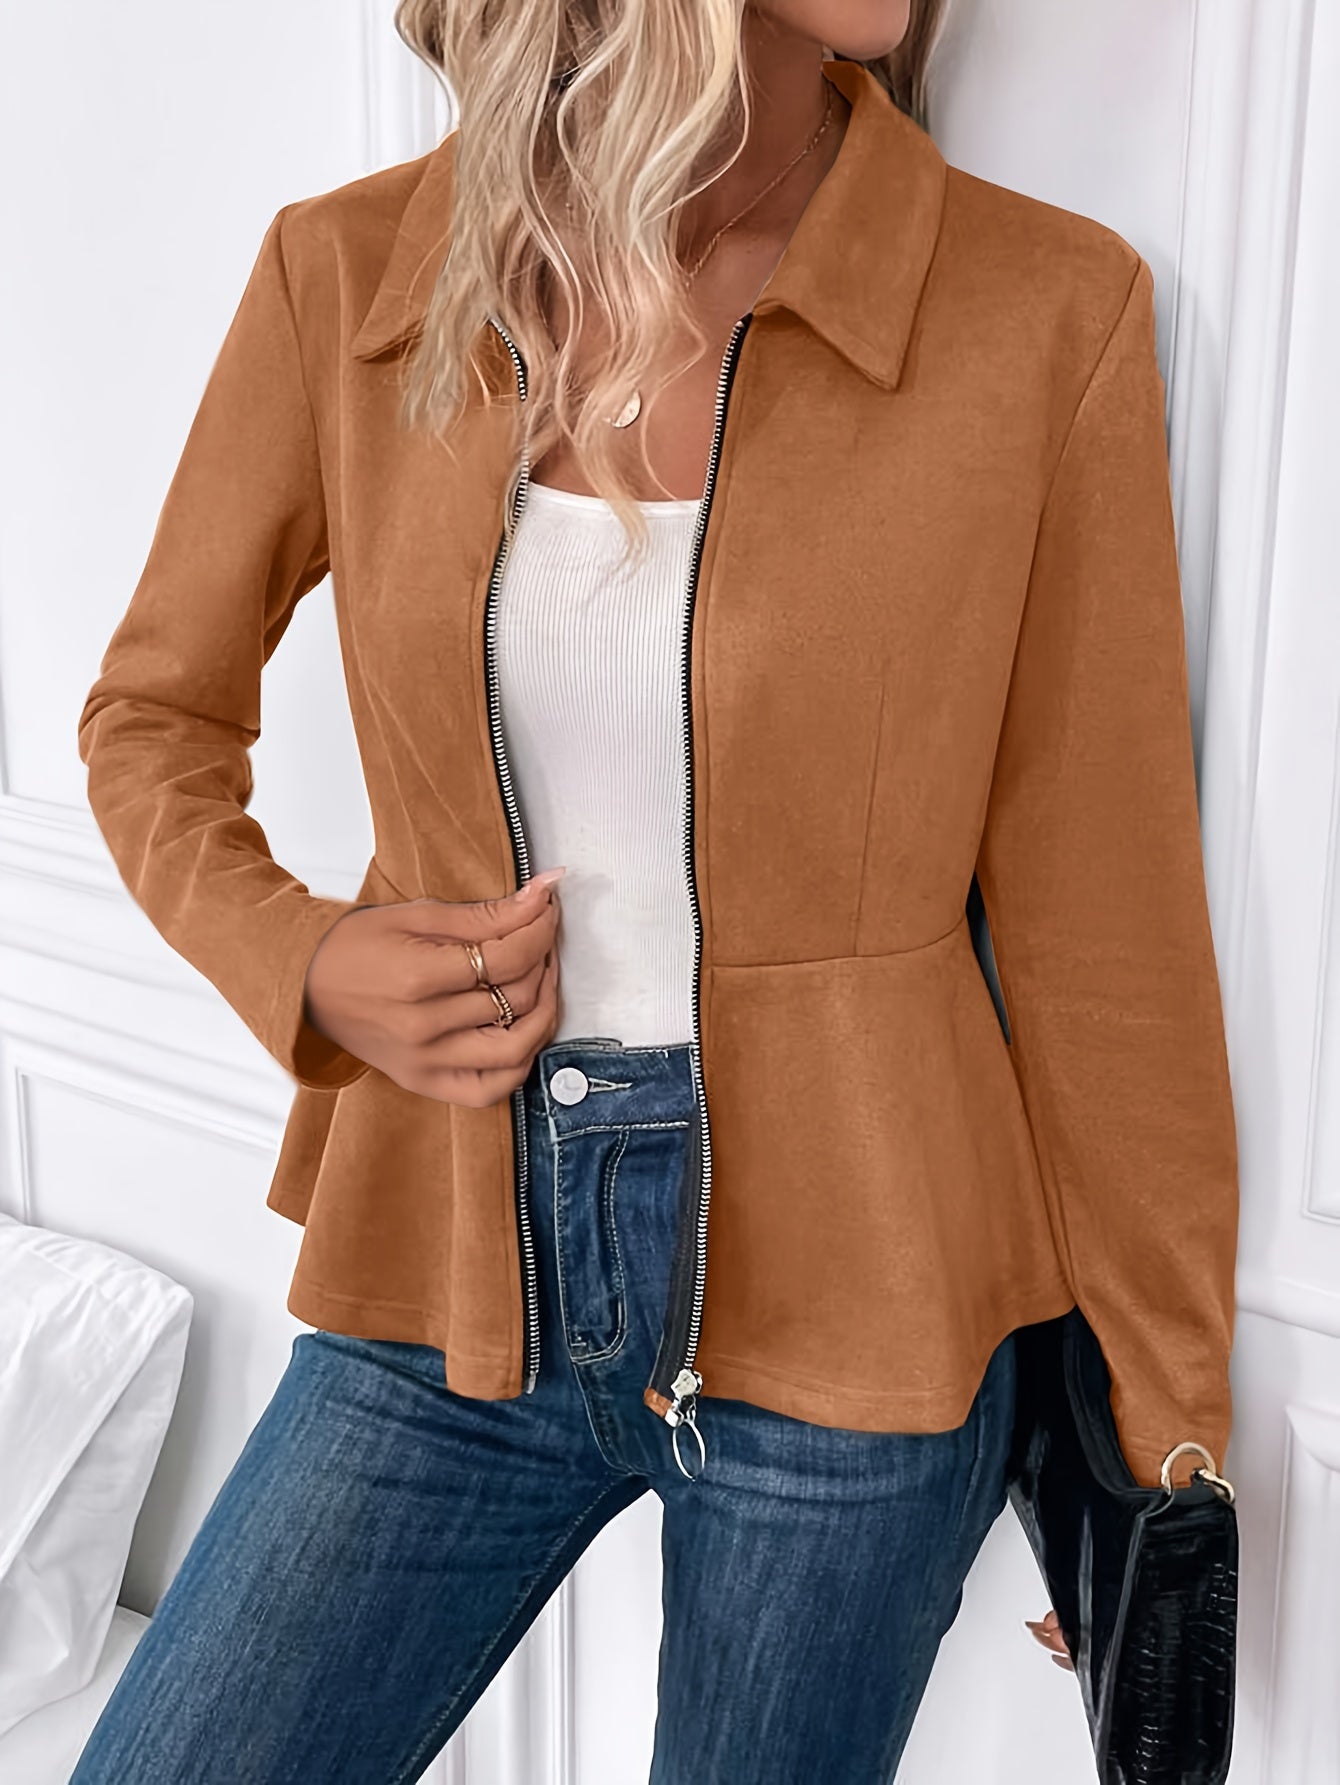 Solid Ruffle Trim Zipper Jacket, Vintage Long Sleeve Outwear For Fall & Winter, Women's Clothing